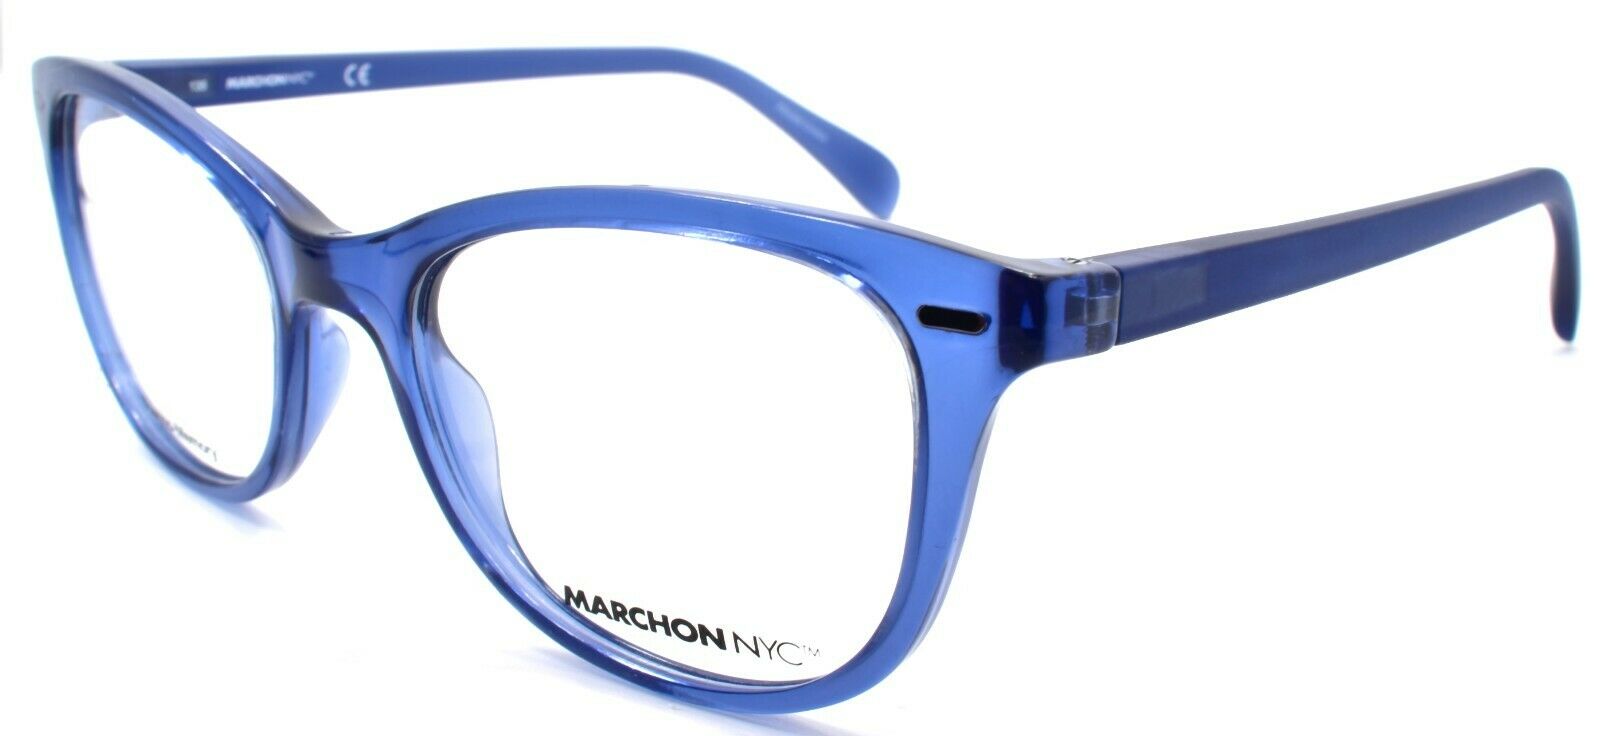 1-Marchon M5803 434 Women's Eyeglasses Frames 51-19-135 Blue Storm-886895416504-IKSpecs